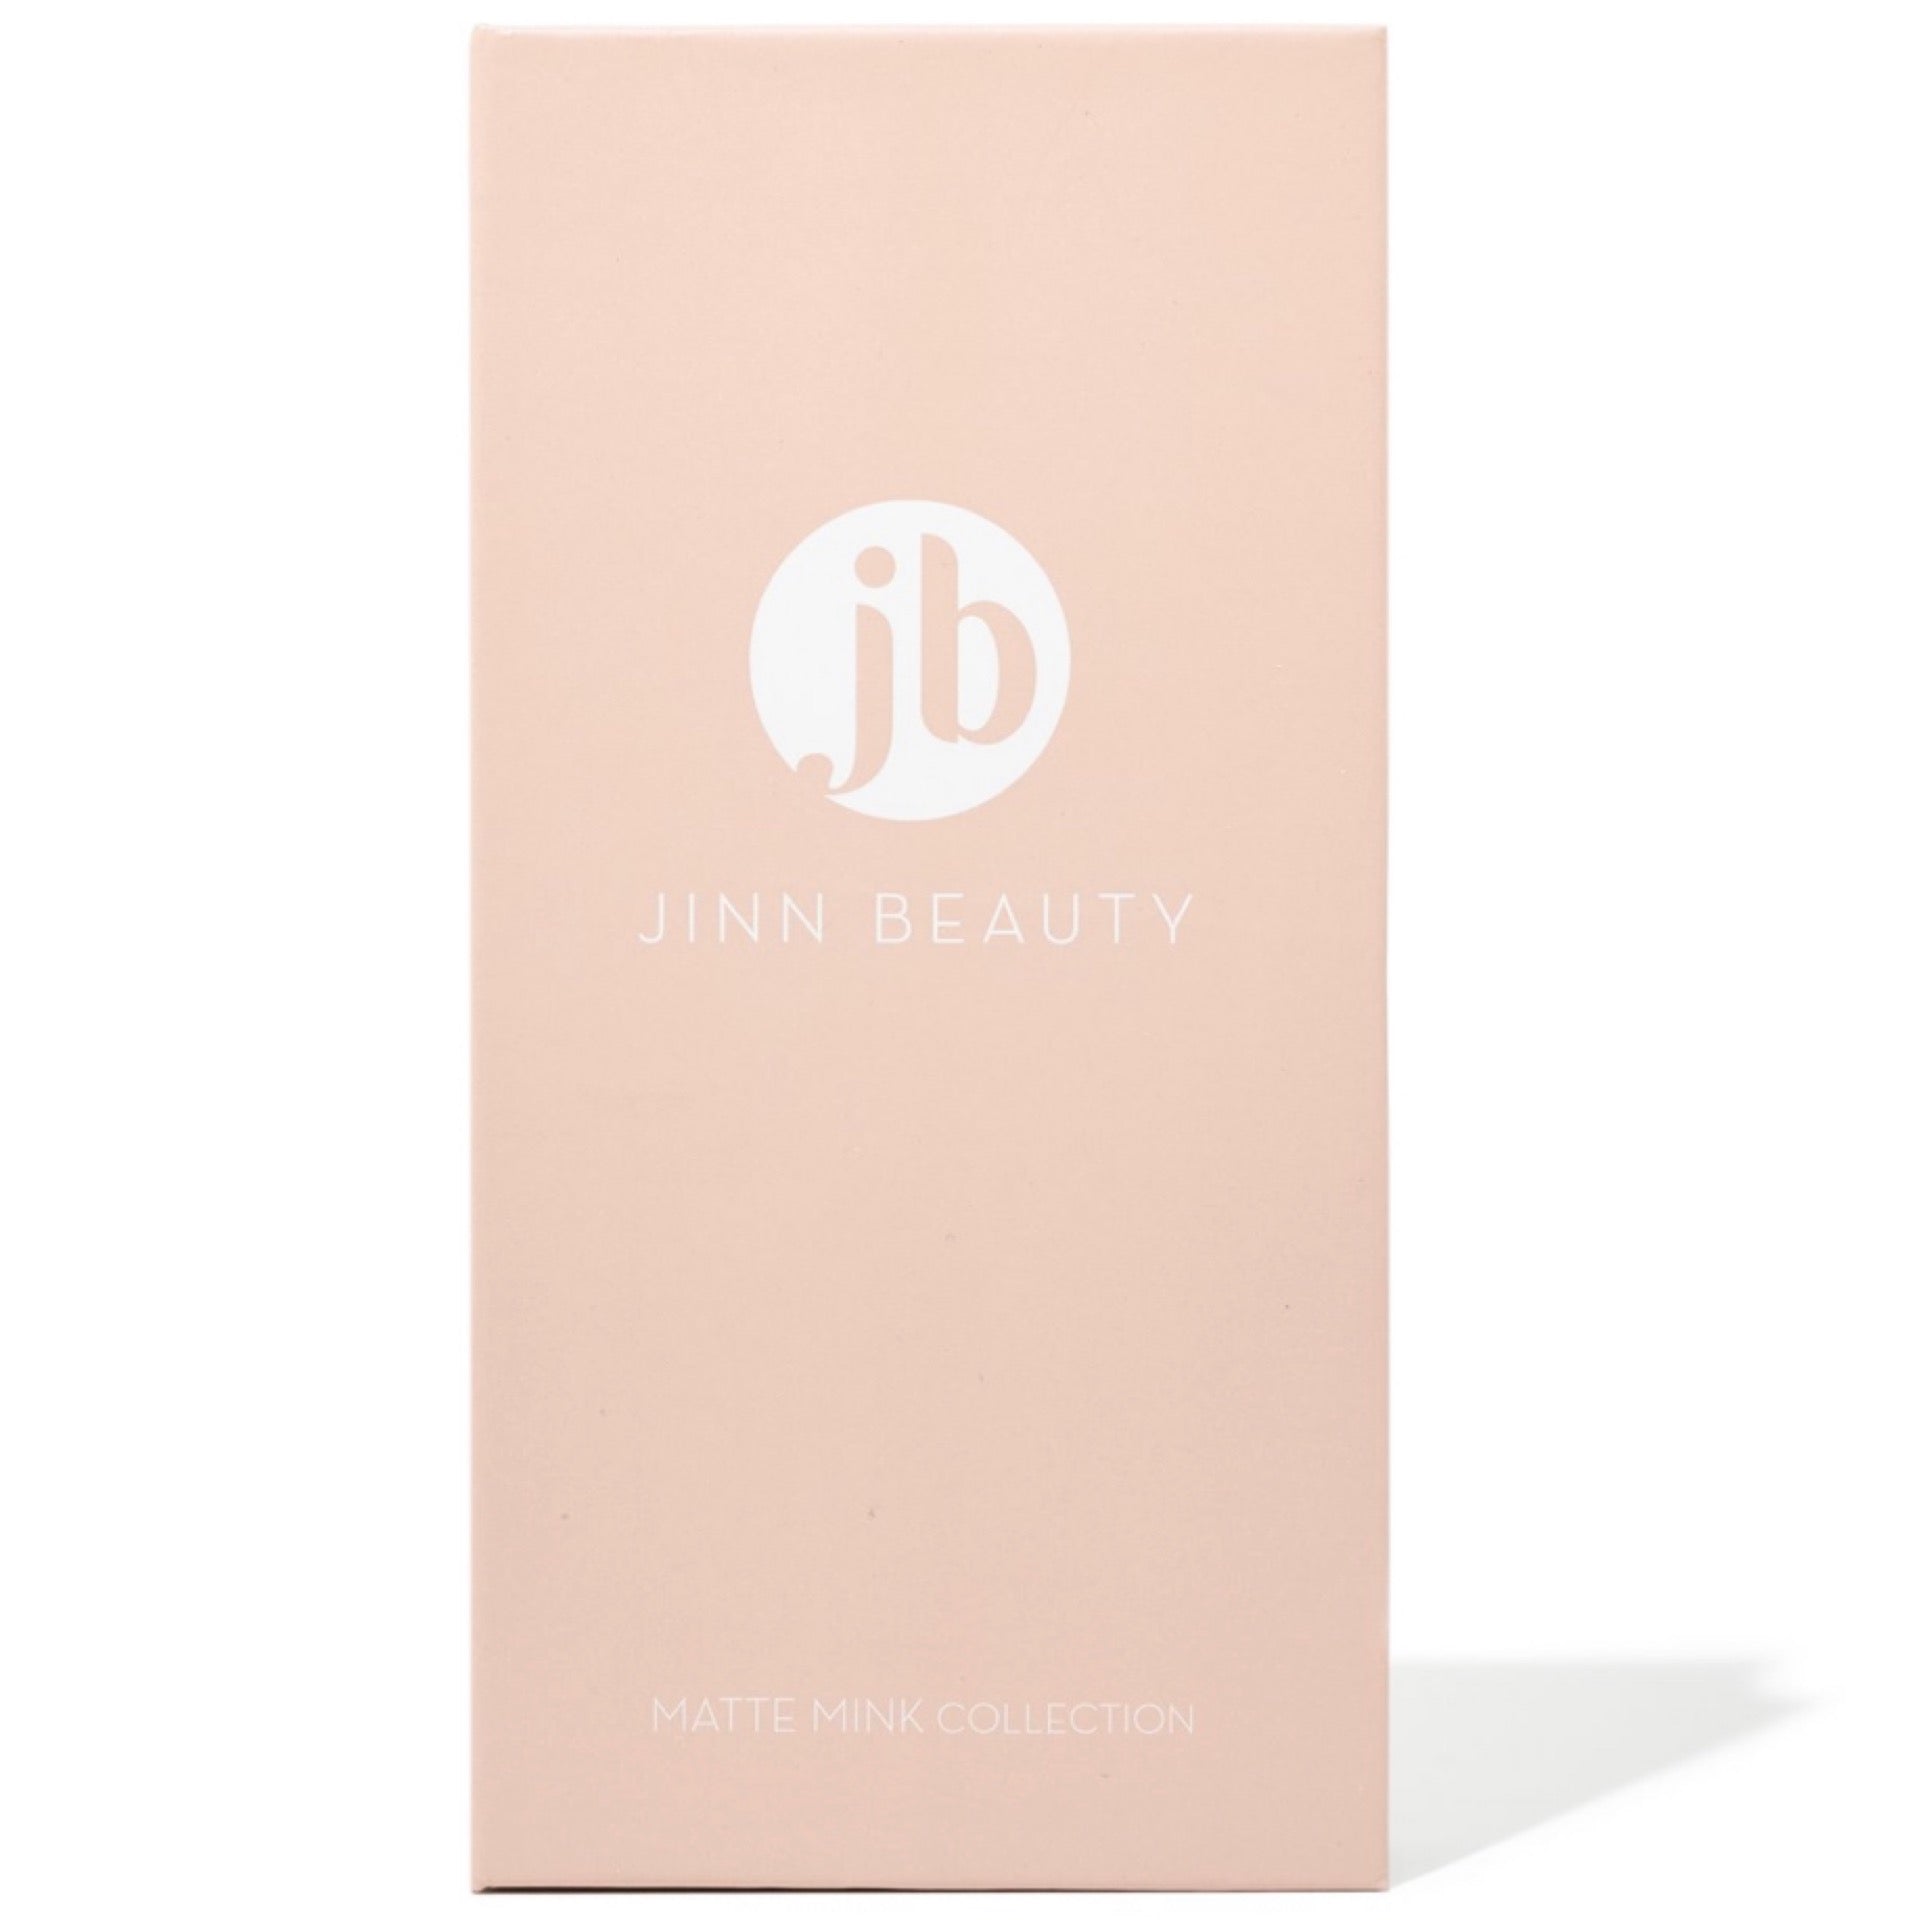 Jinn Beauty CC 0.05 Singles